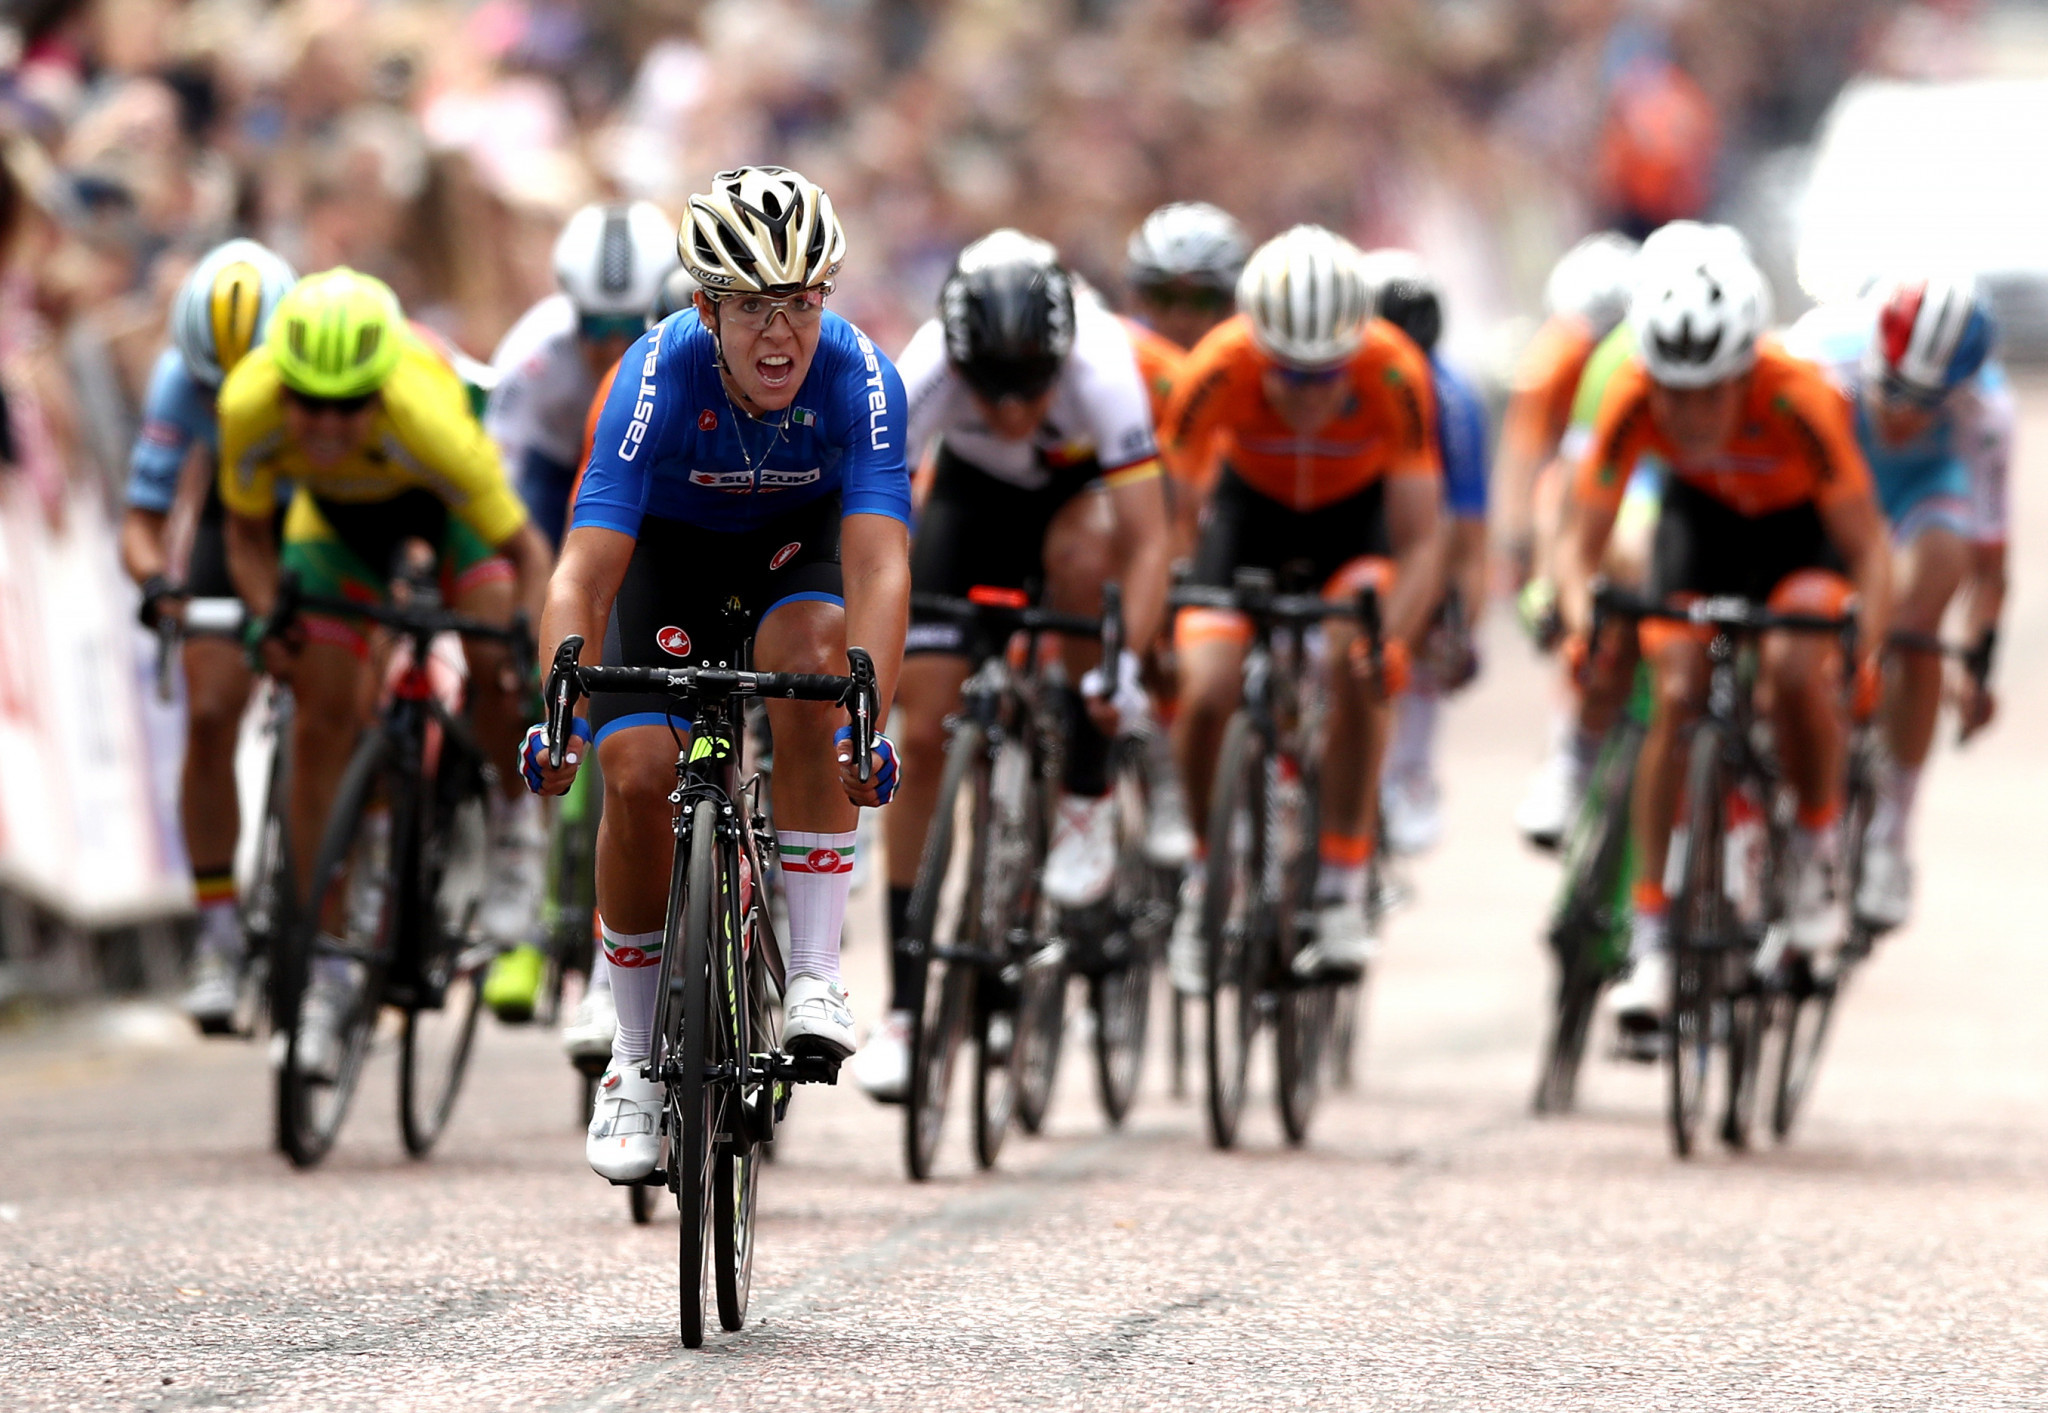 Alkmaar to host 2019 UEC European Road Cycling Championships